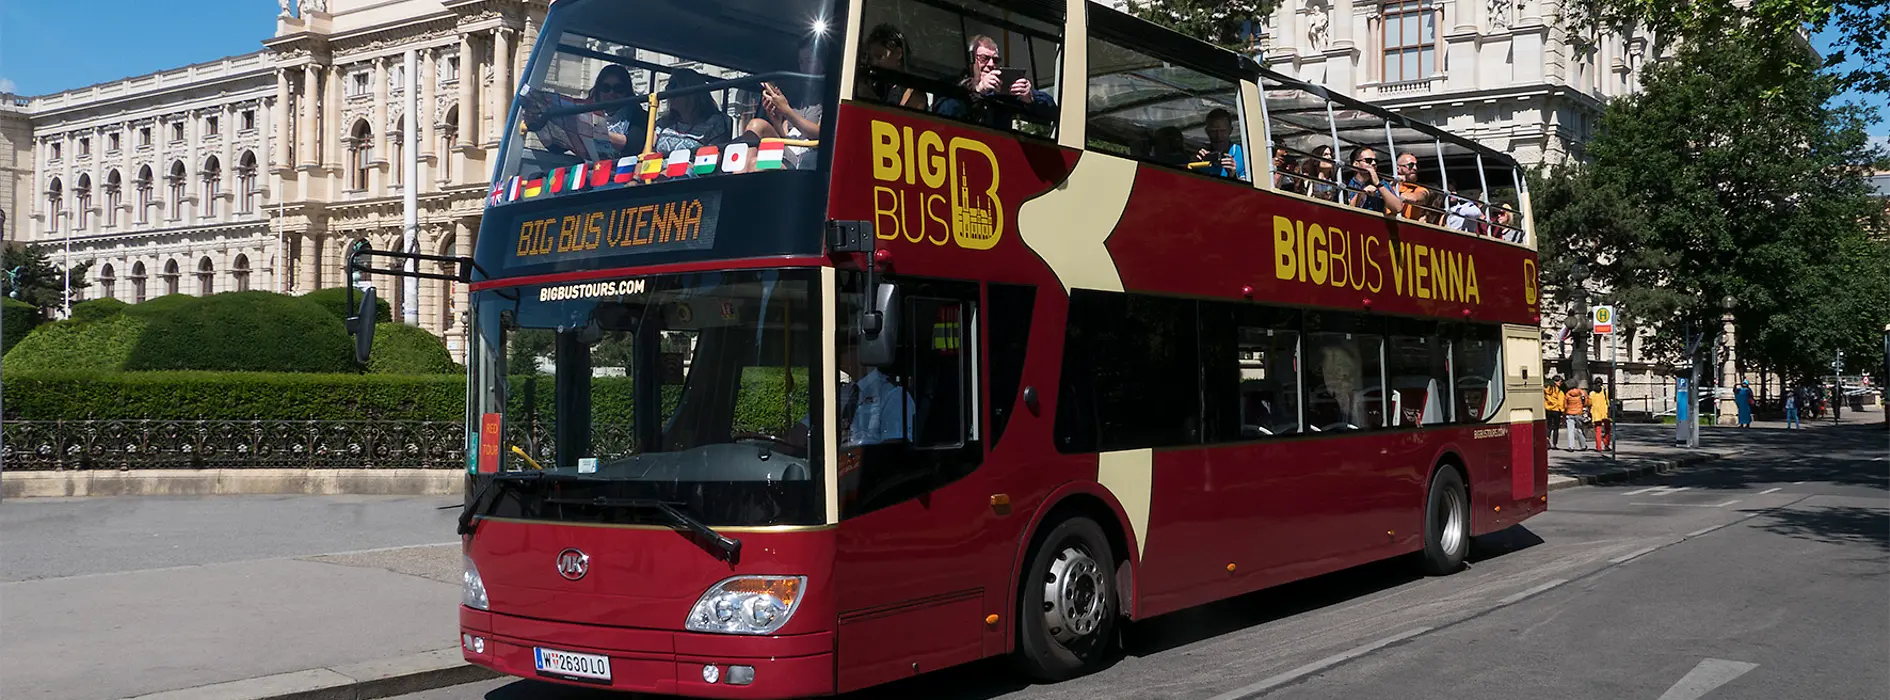 Big Bus Vienna - autobus rosso a due piani